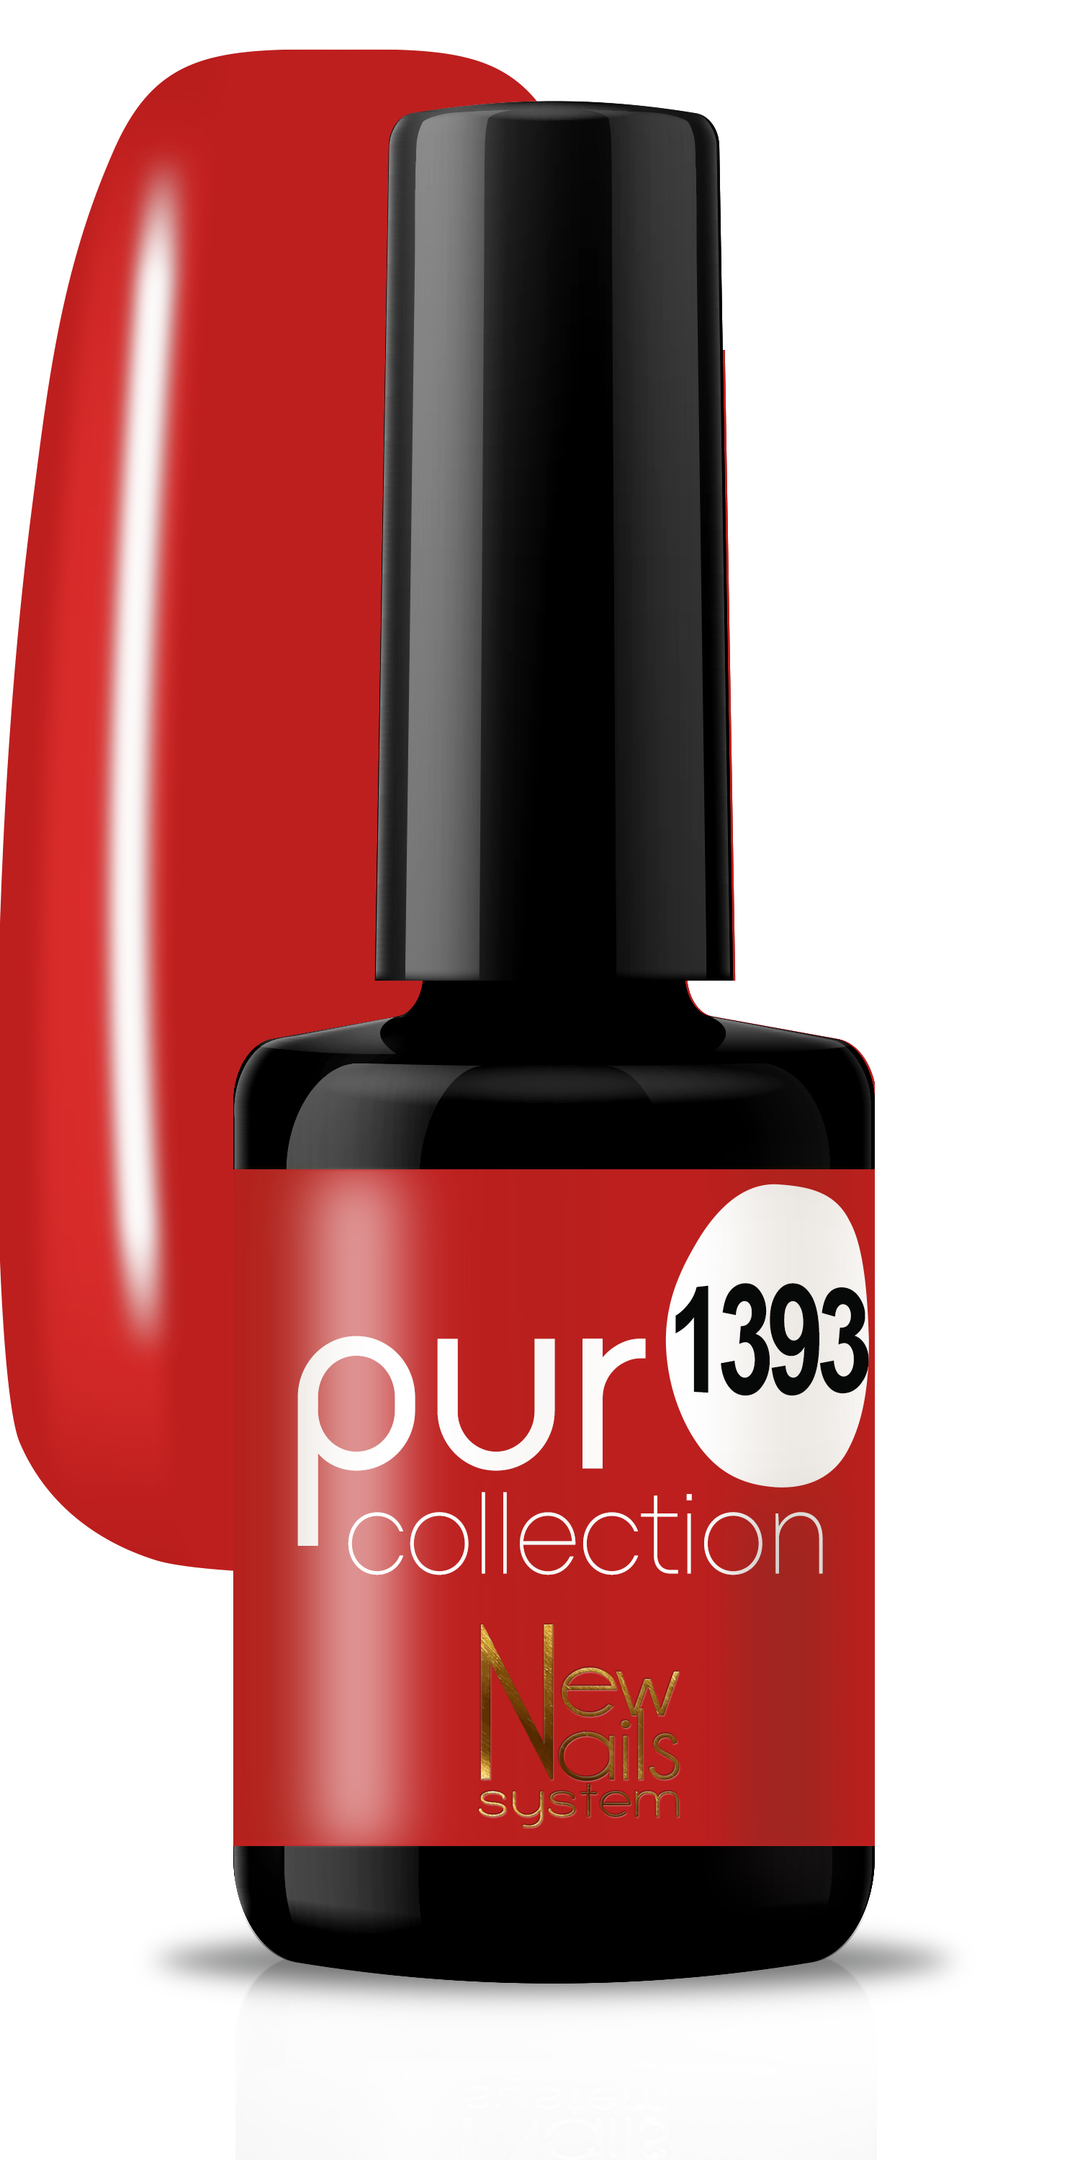 Puro collection 1393 color Rouge Passion semi-permanent 5ml